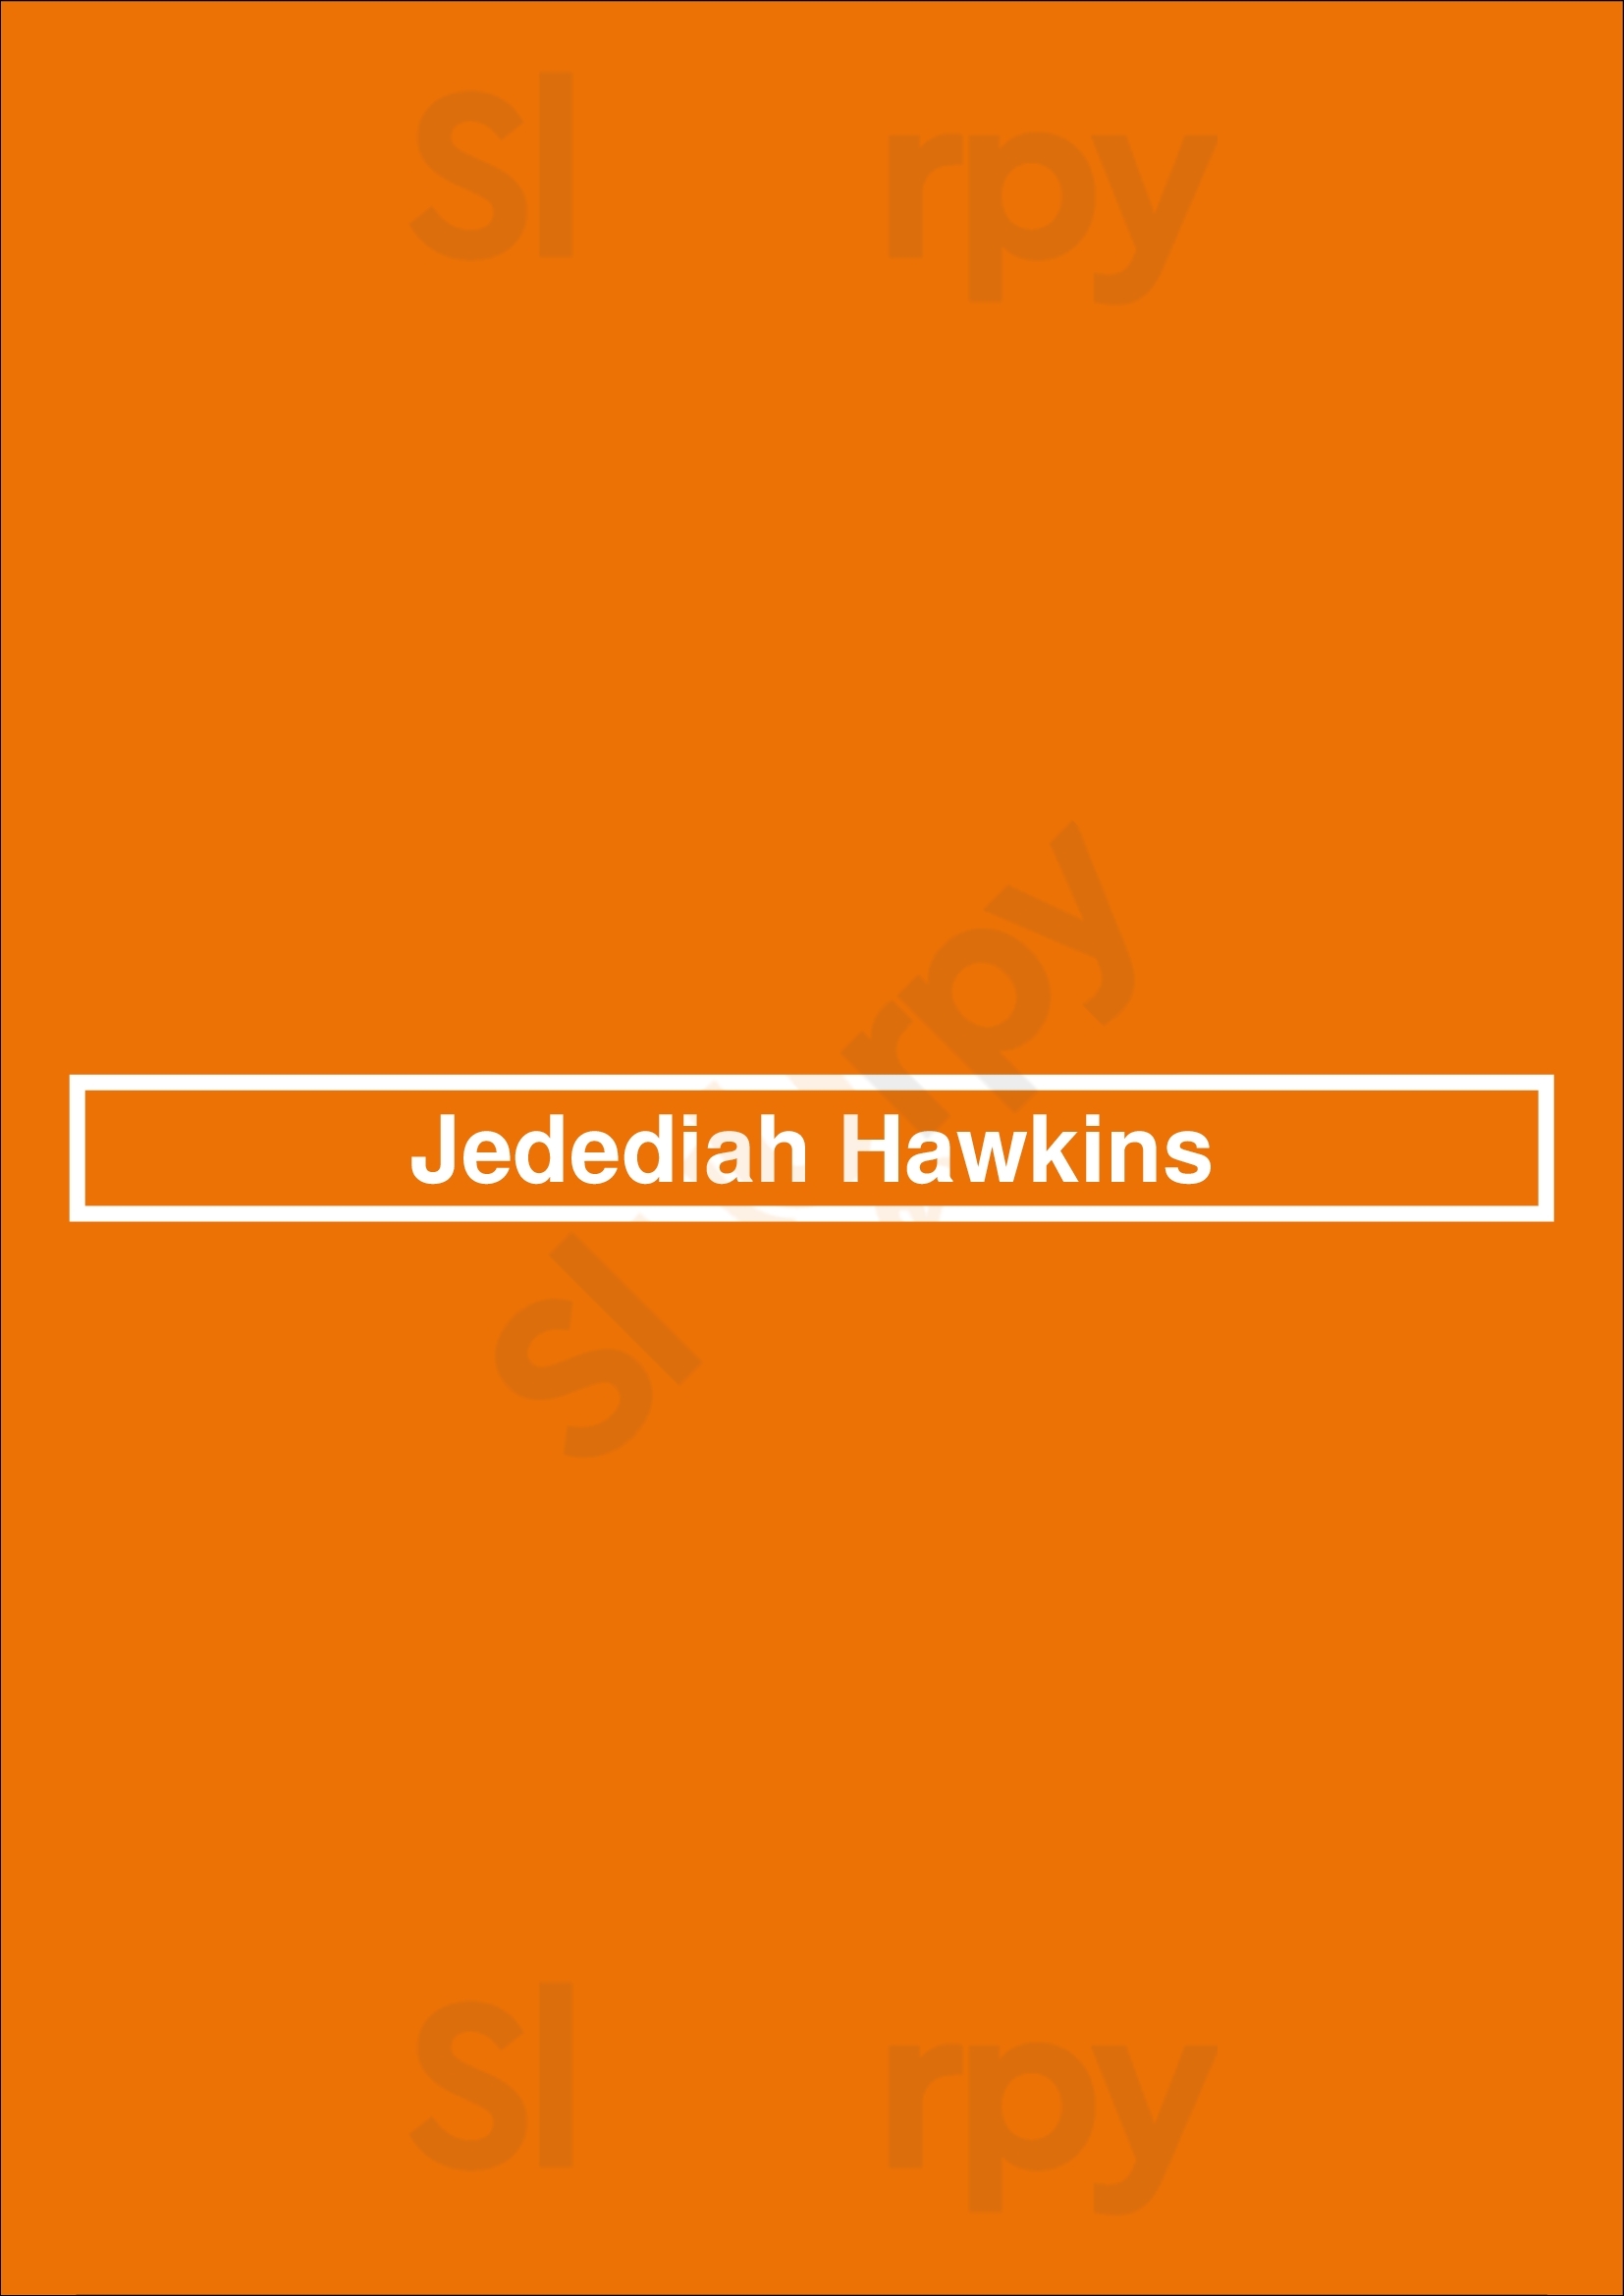 Jedediah Hawkins Jamesport Menu - 1